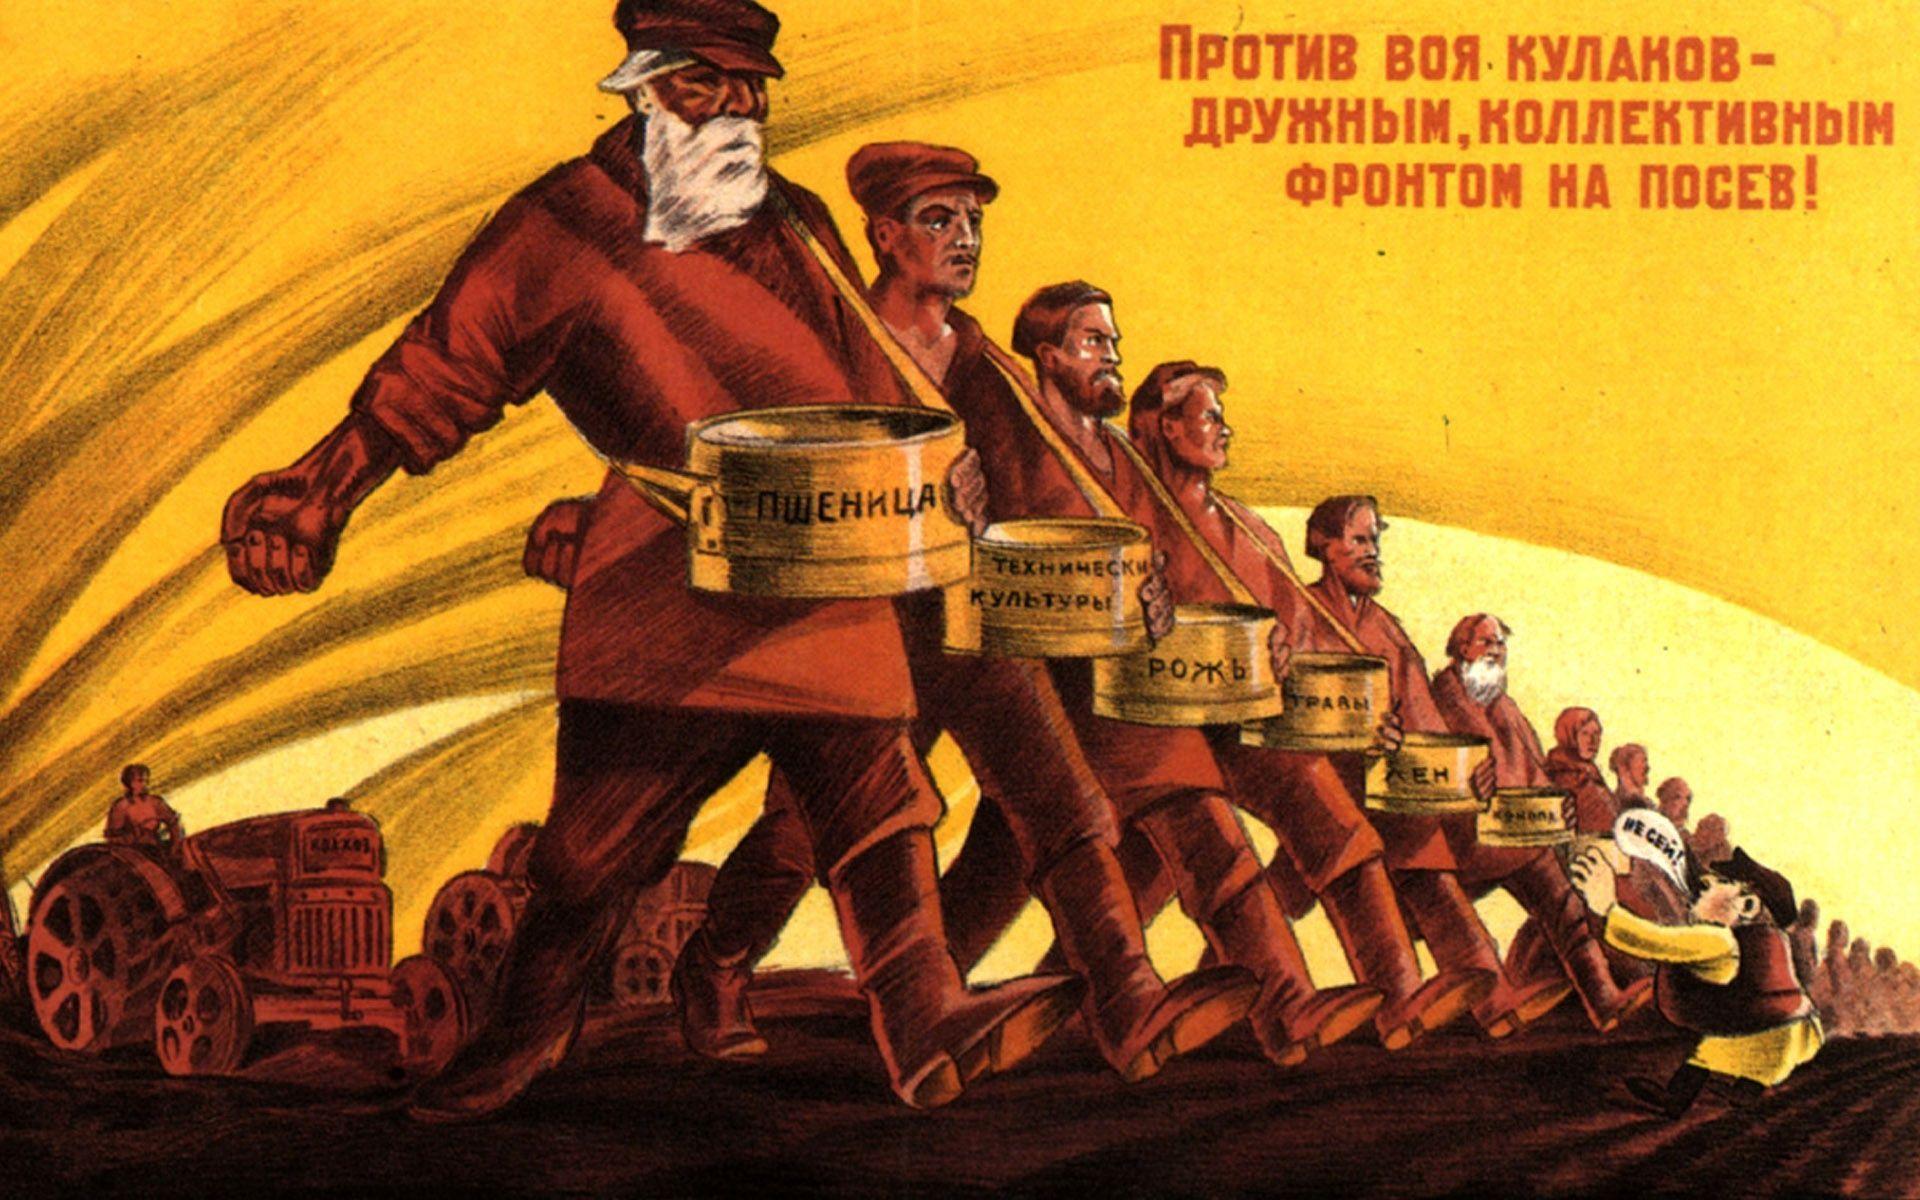 Soviet wallpapers in full HD